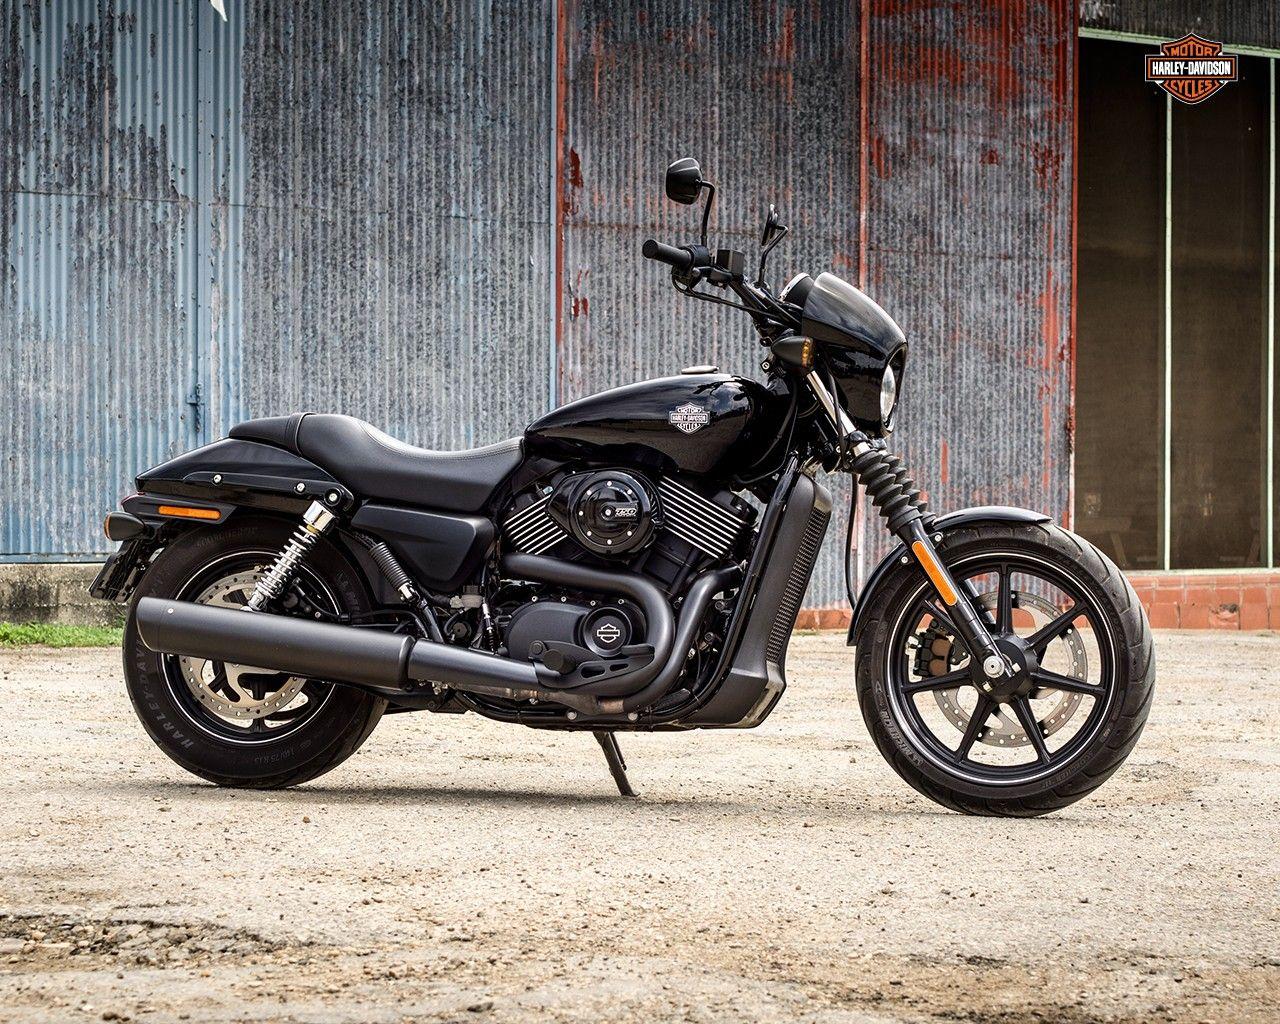 Harley Davidson Street® 750 Motorcycles. Harley Davidson